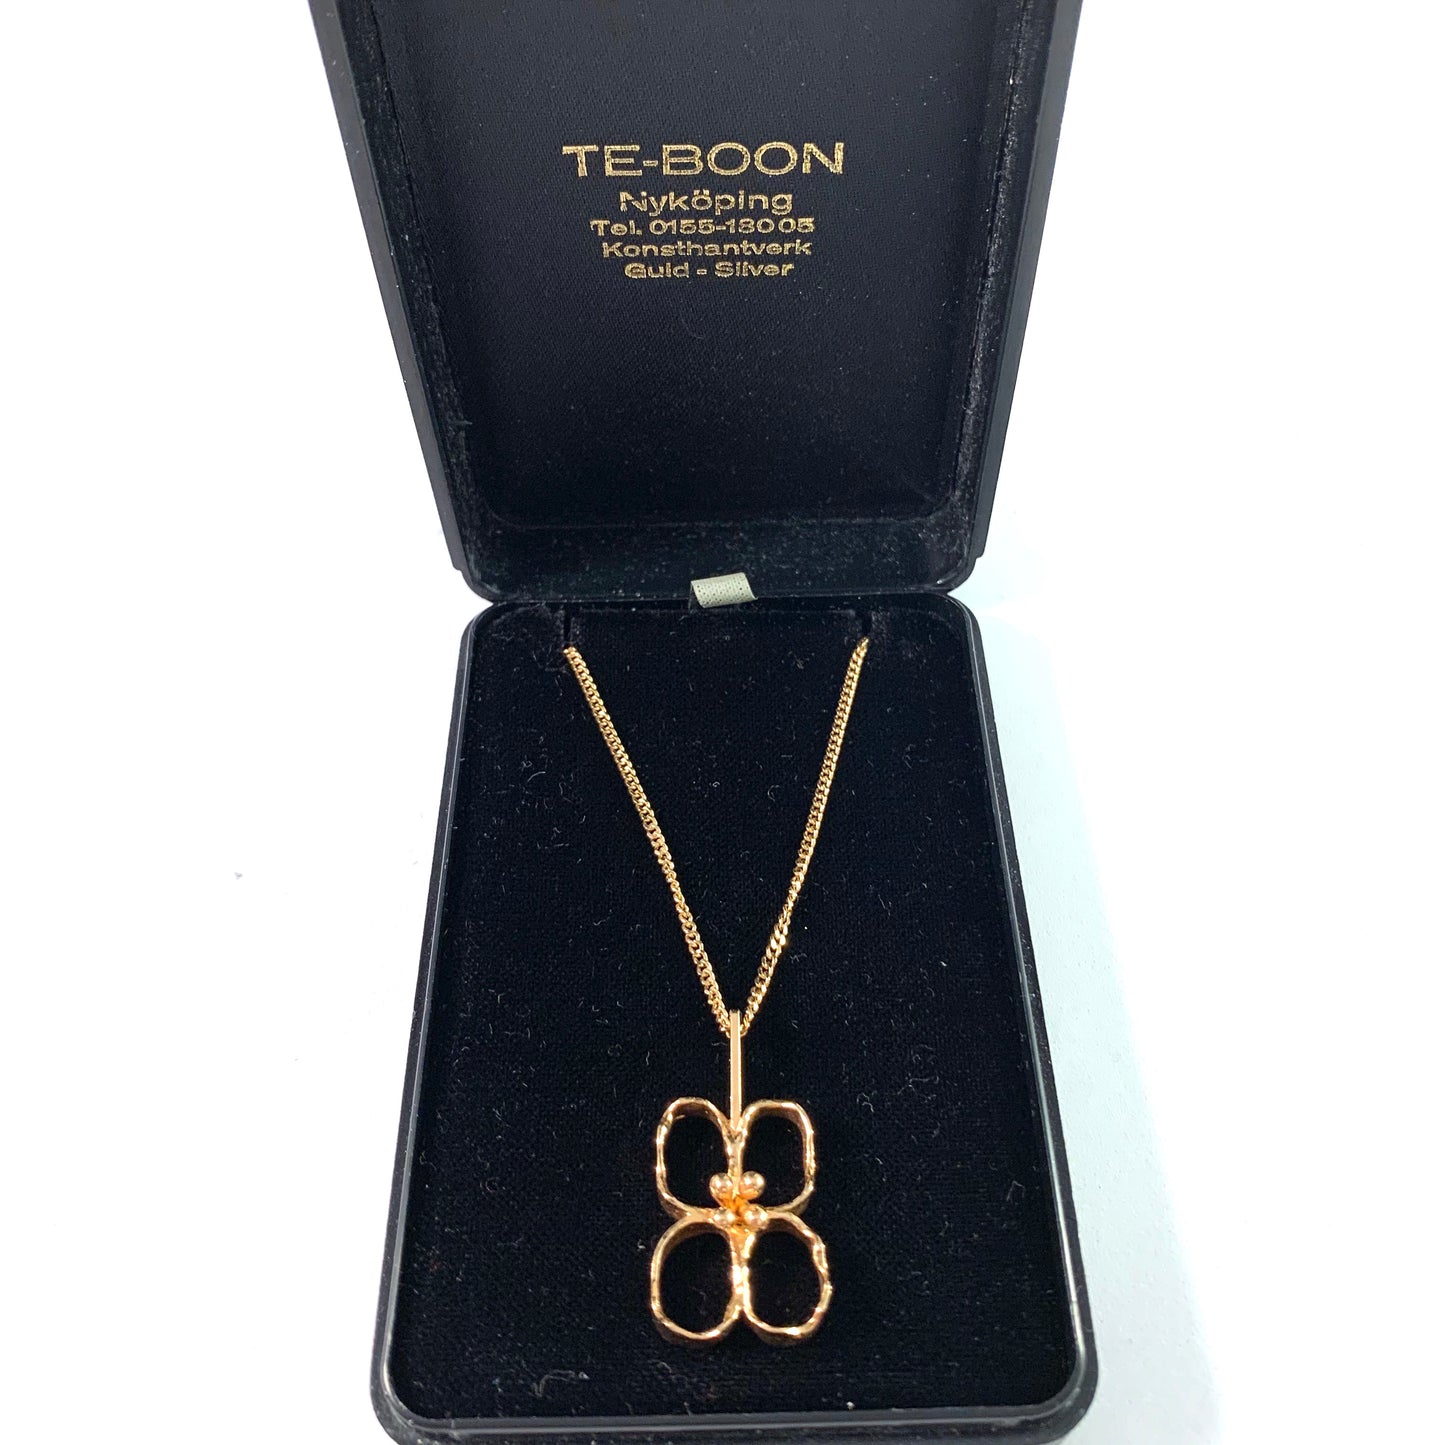 Te-Boon, Sweden 1976 Modernist 18k Gold Pendant Necklace. Original box.